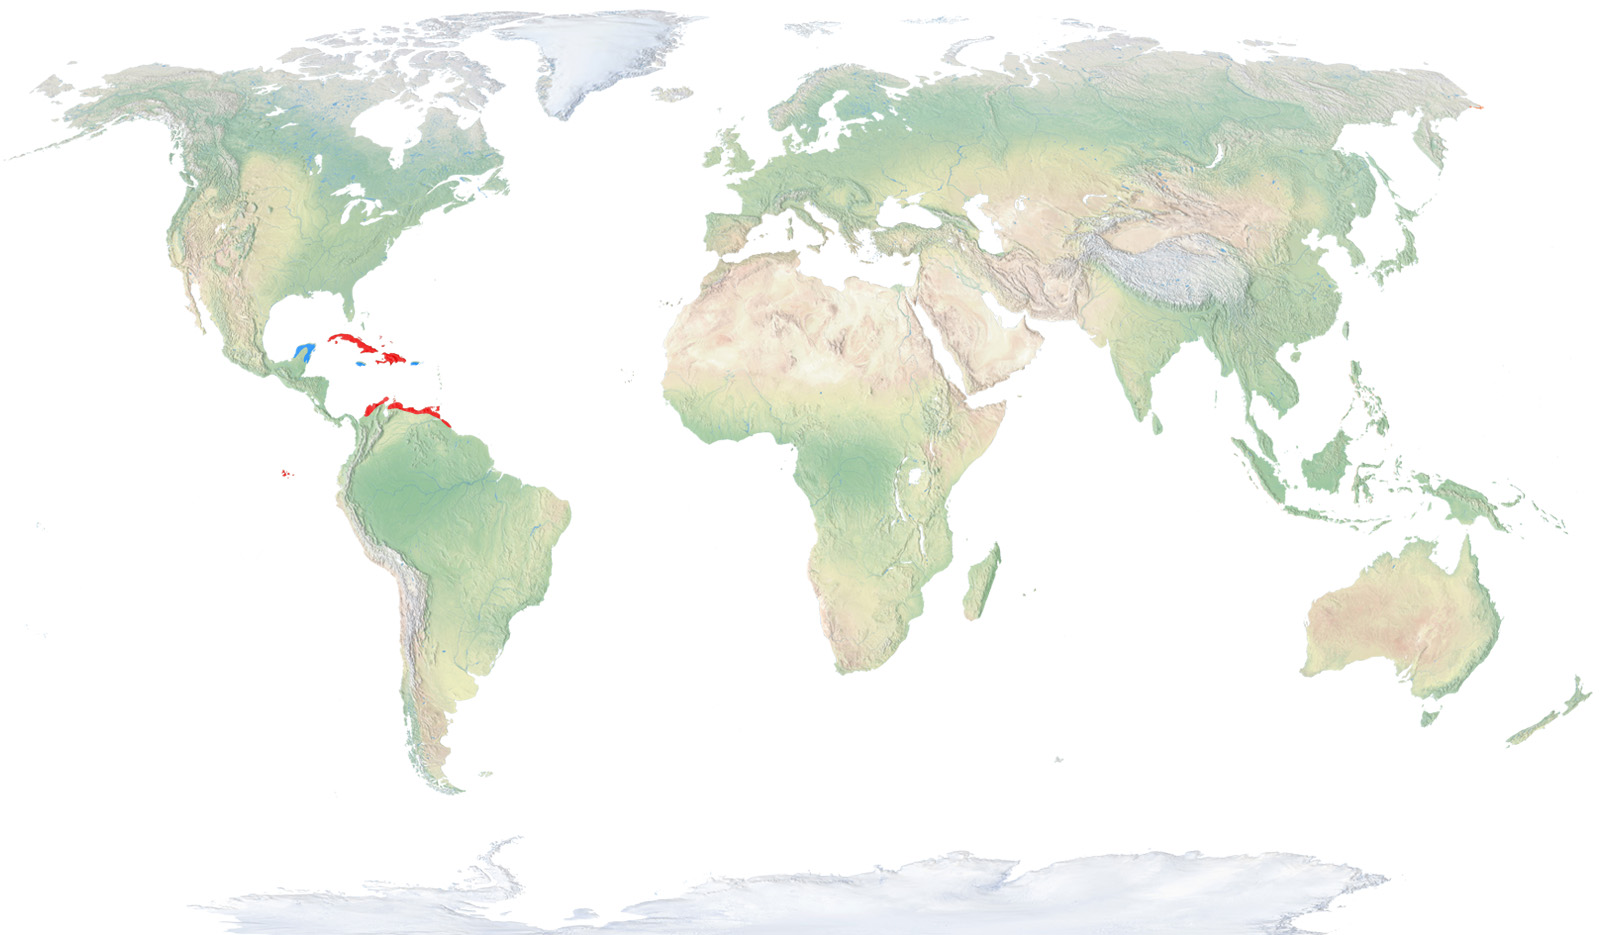 Antilles, Yucatan Peninsula, northern Venezuela and Colombia and the Galapagos Islands.